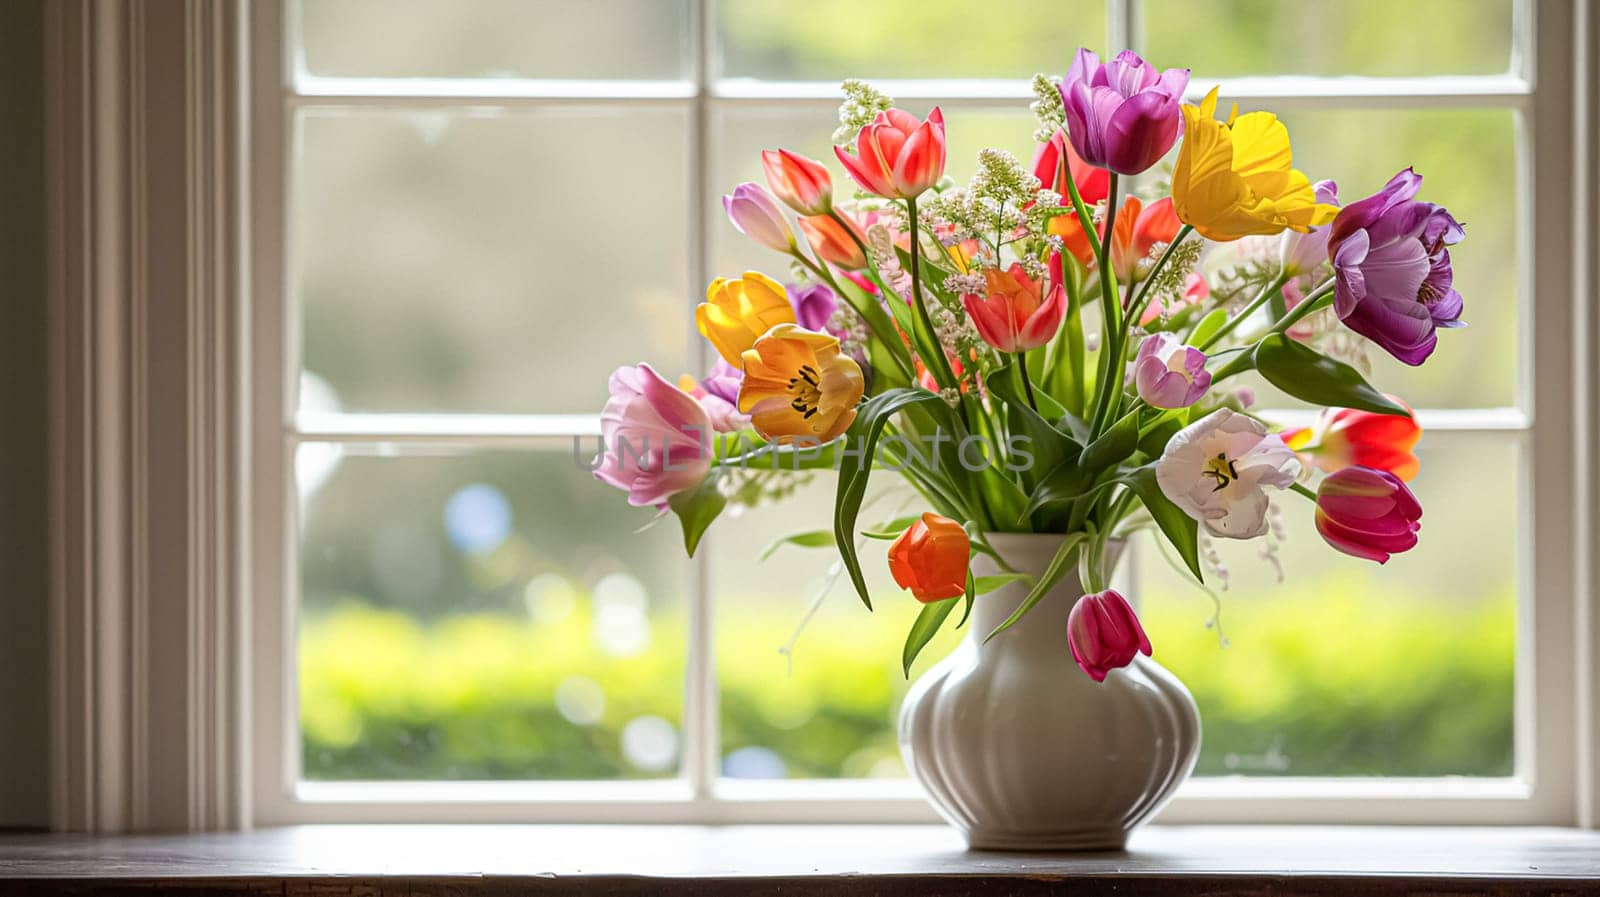 Spring flowers in vintage vase, beautiful floral arrangement, home decor, wedding and florist design by Anneleven